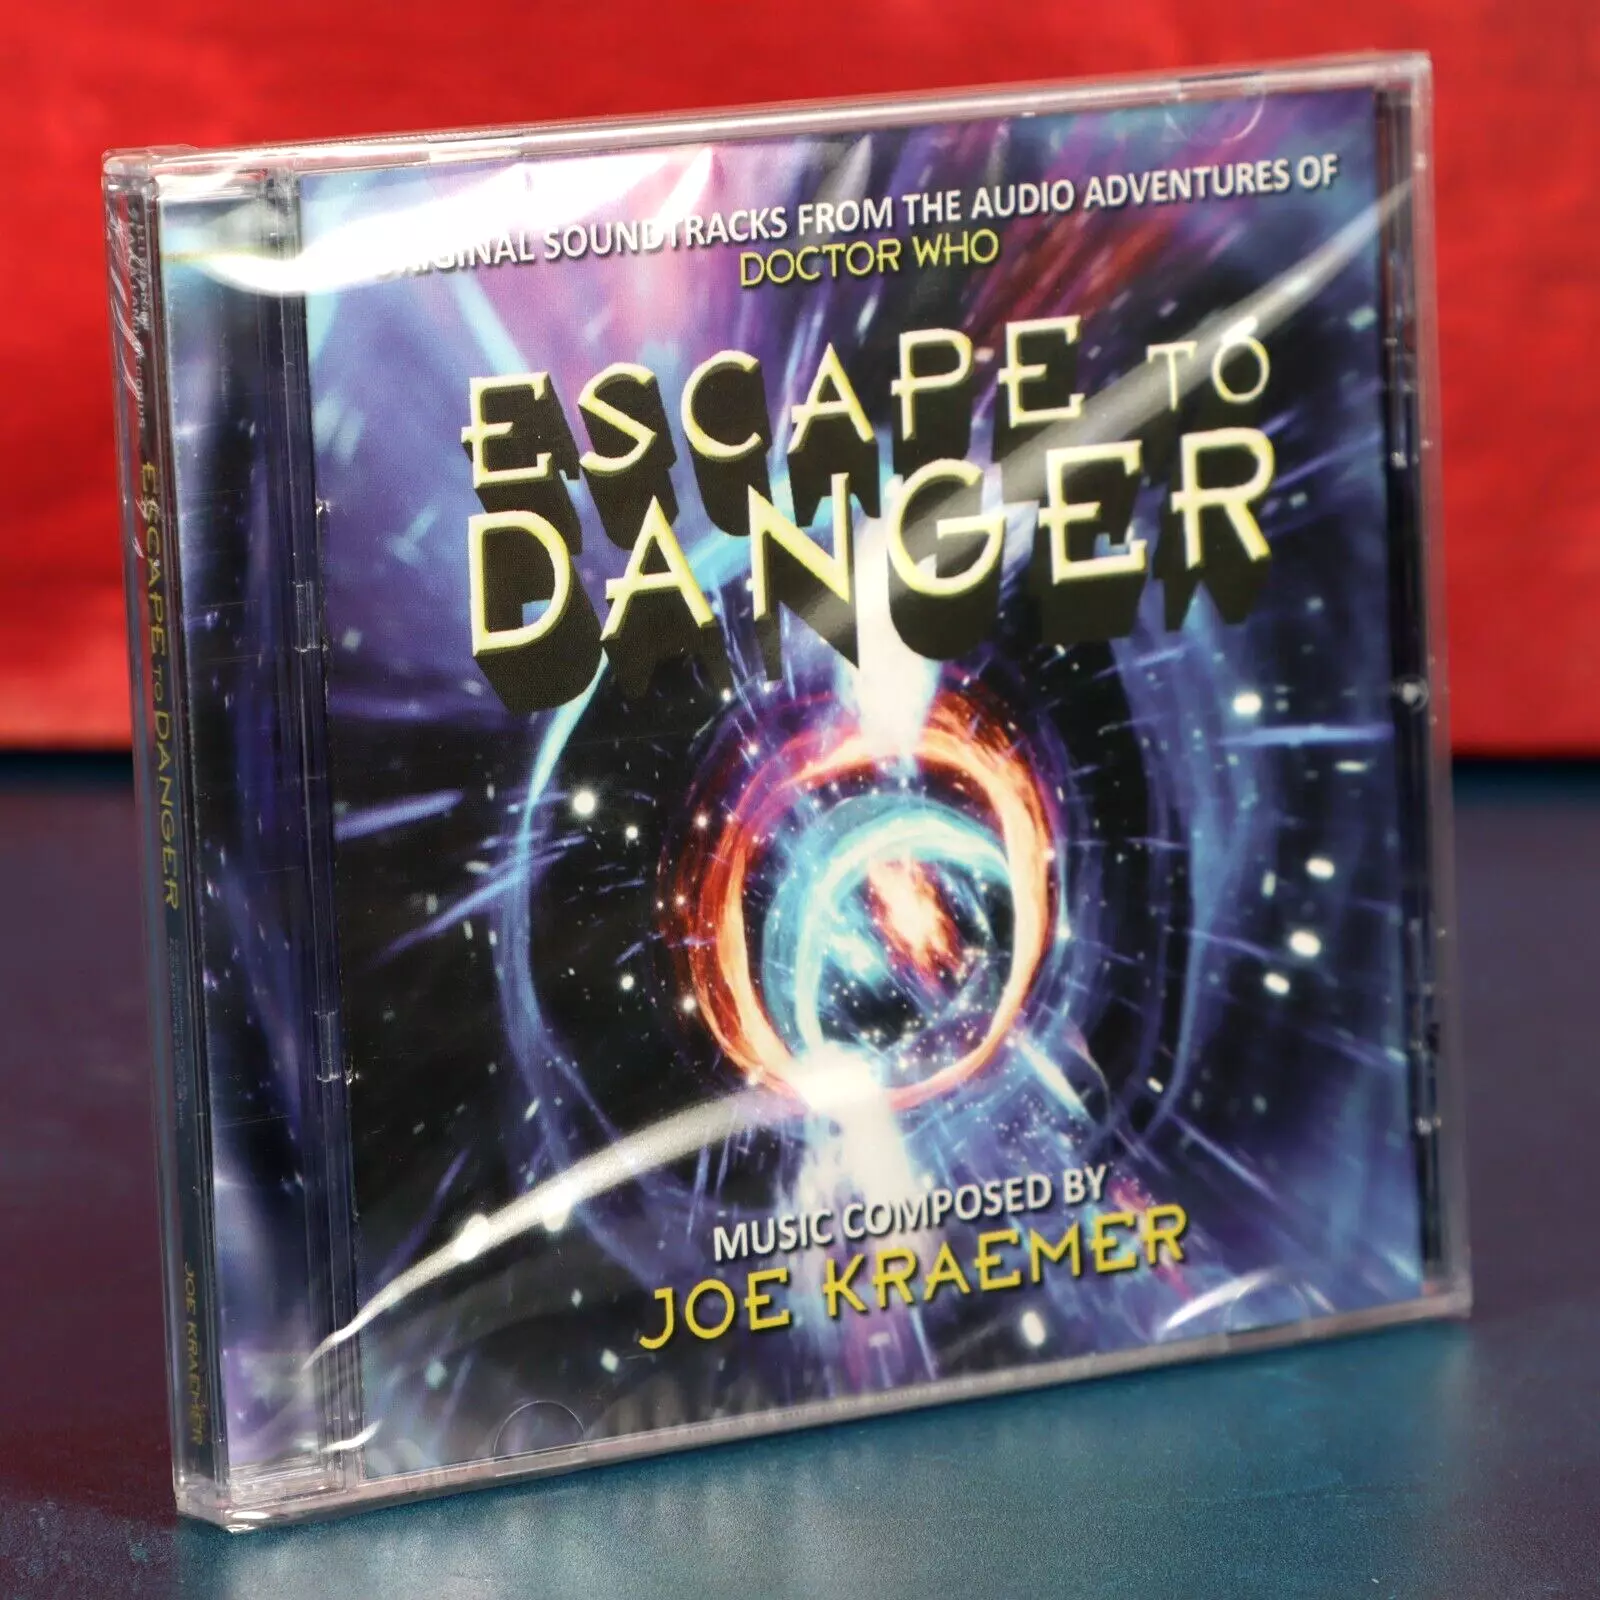 Doctor Who Escape To Danger Soundtrack CD LE 1000 La-La Land Records 2020 Sealed